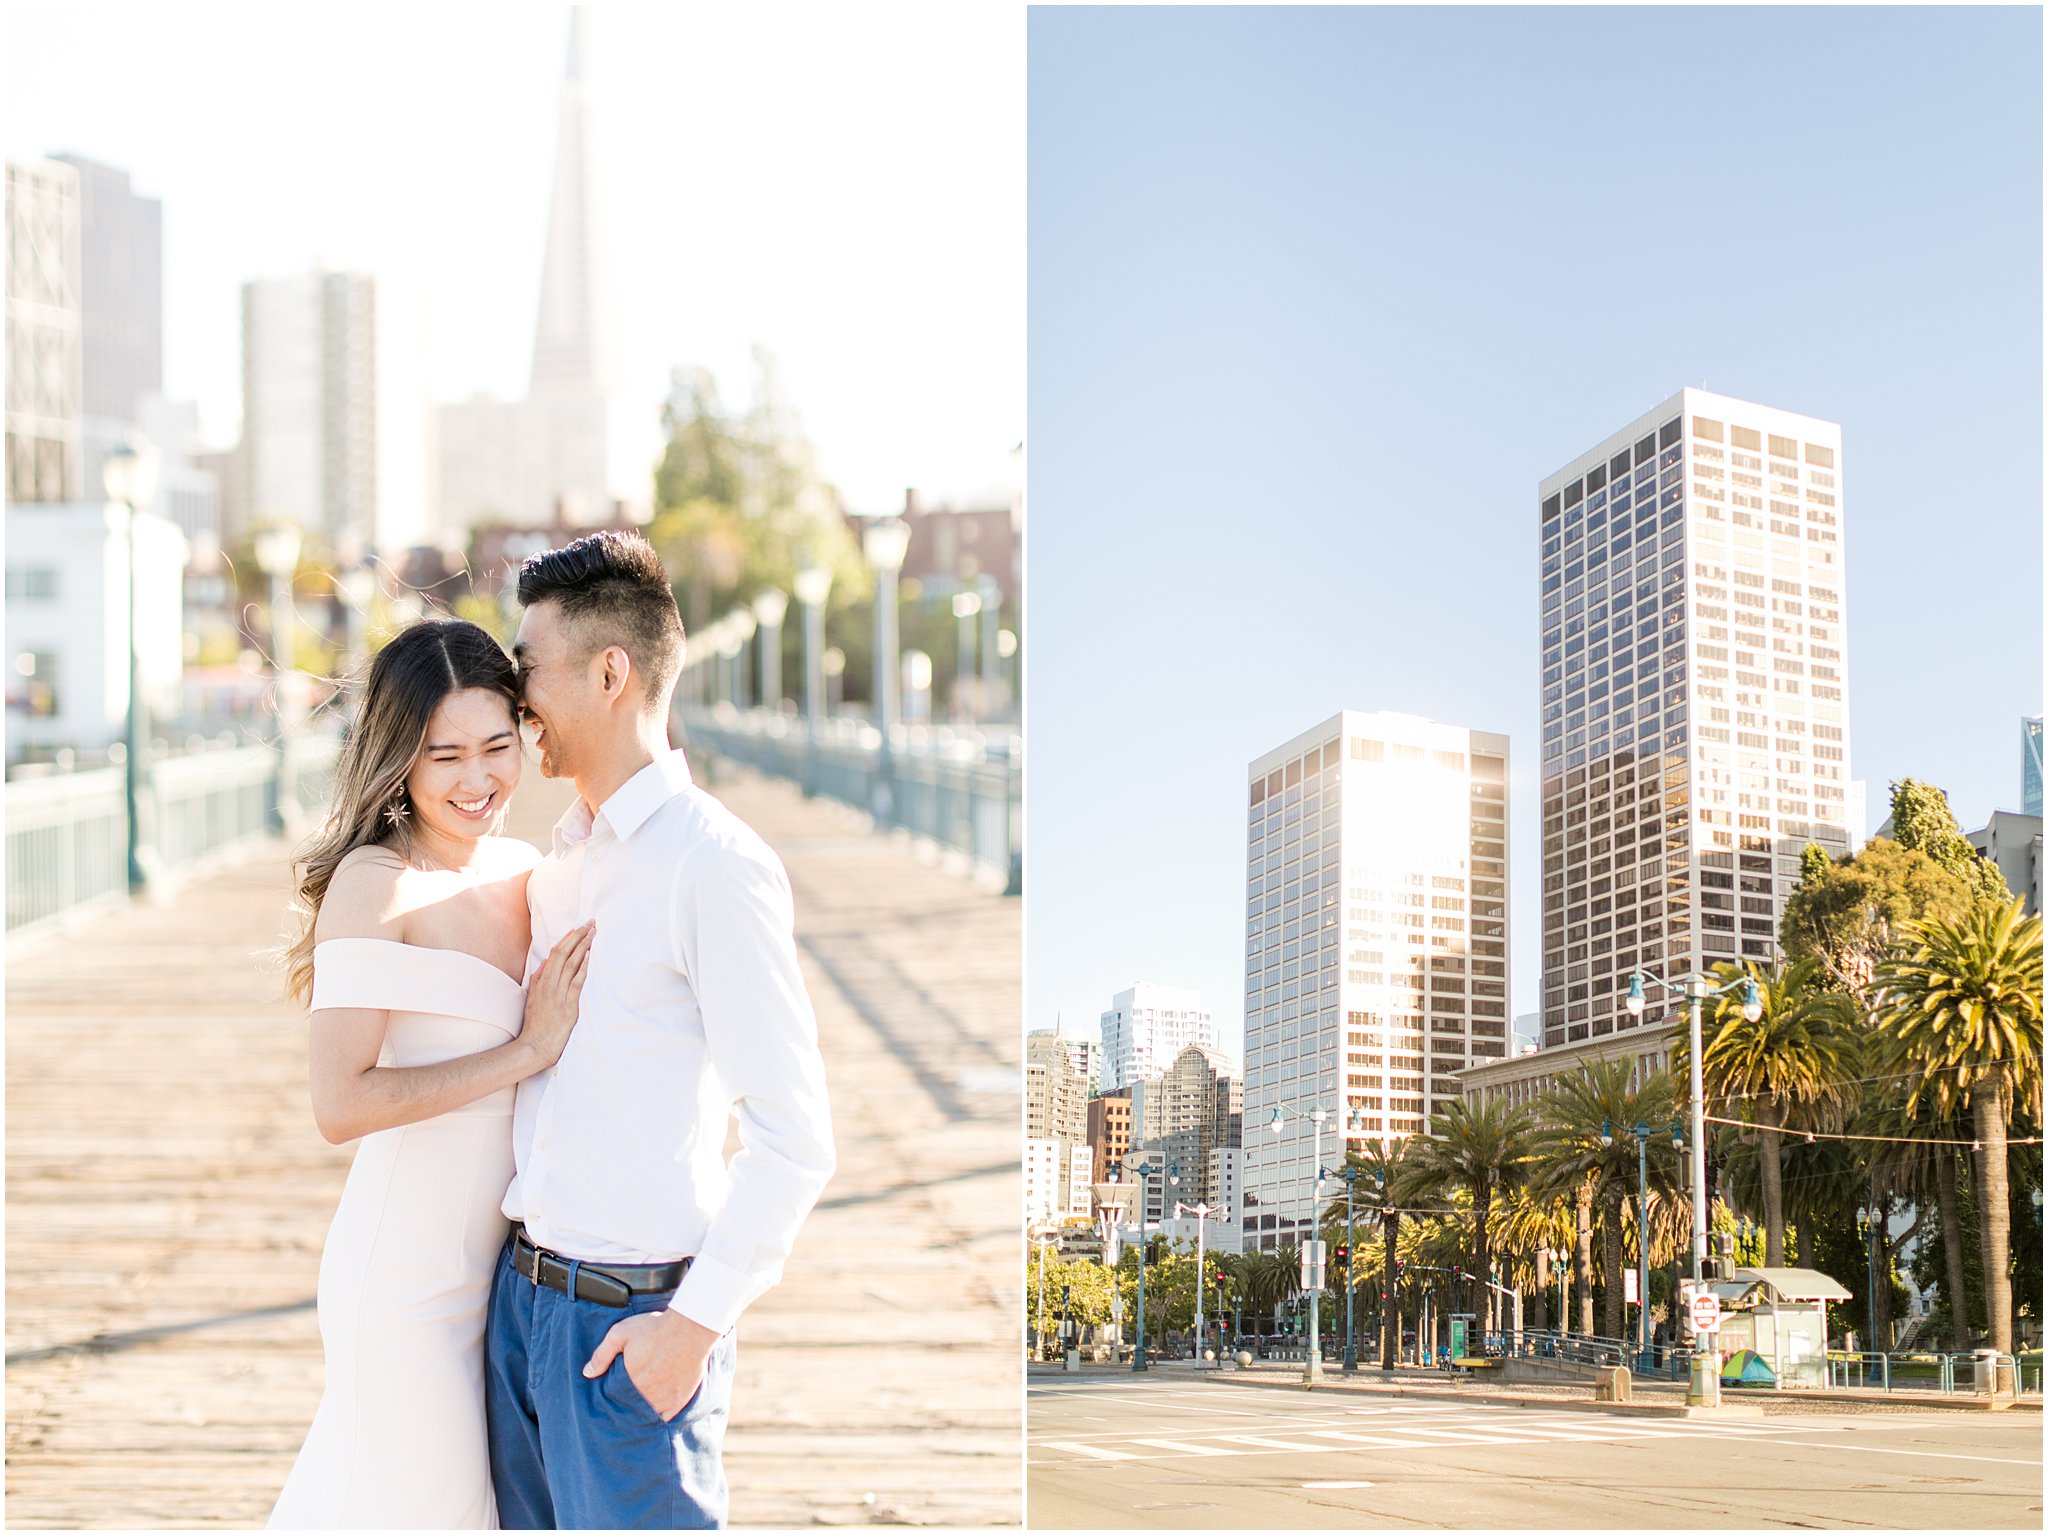 San Francisco Engagement Photos - Bay Area Wedding Photographer - Angela Sue Photography_0006.jpg